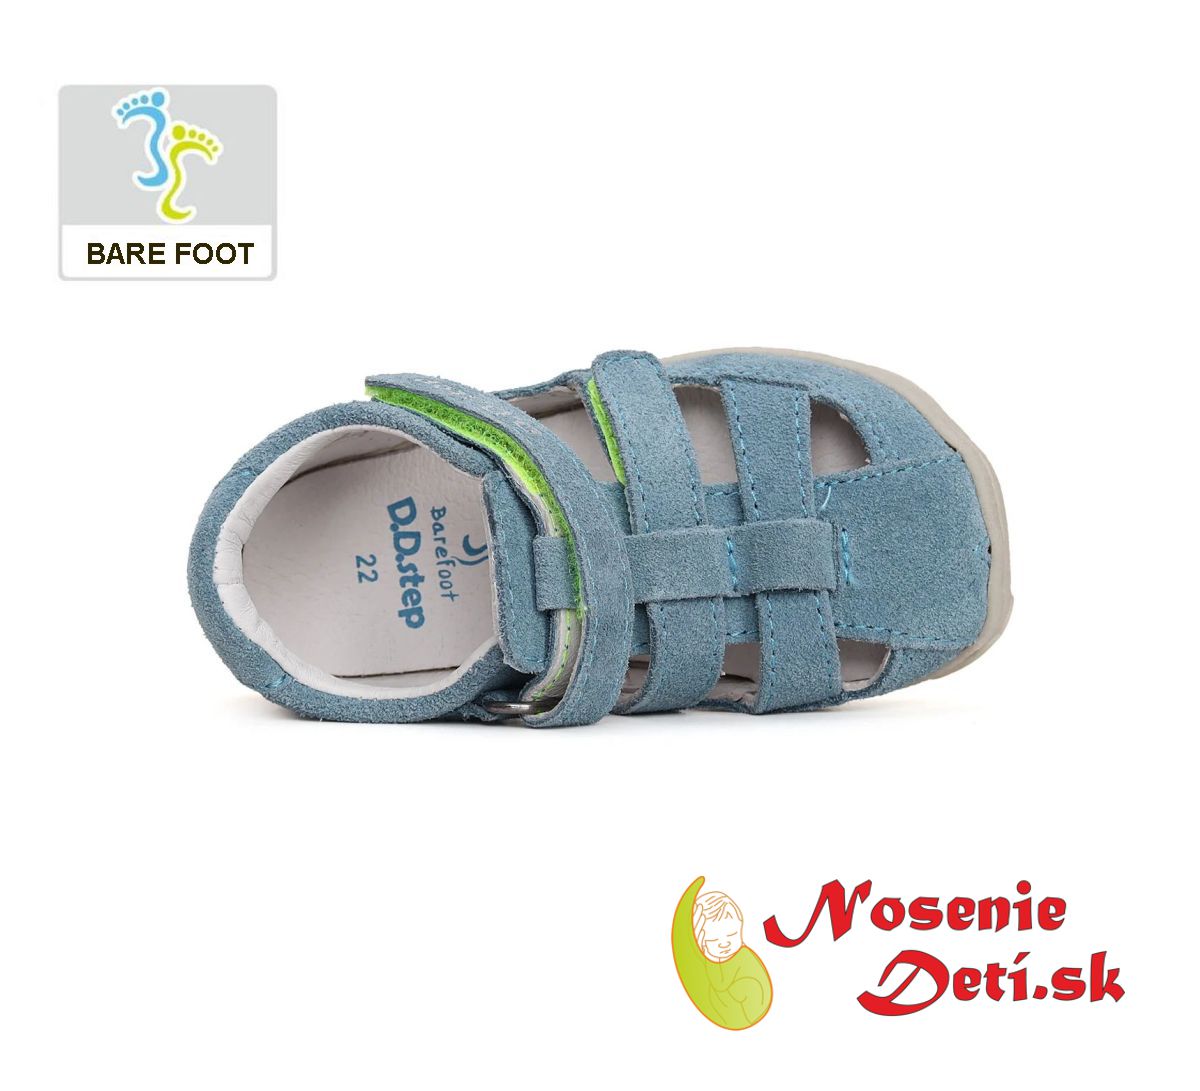 Chlapčenské kožené barefoot sandále s pevnou pätou Svetlomodré D.D. Step 077-41565A